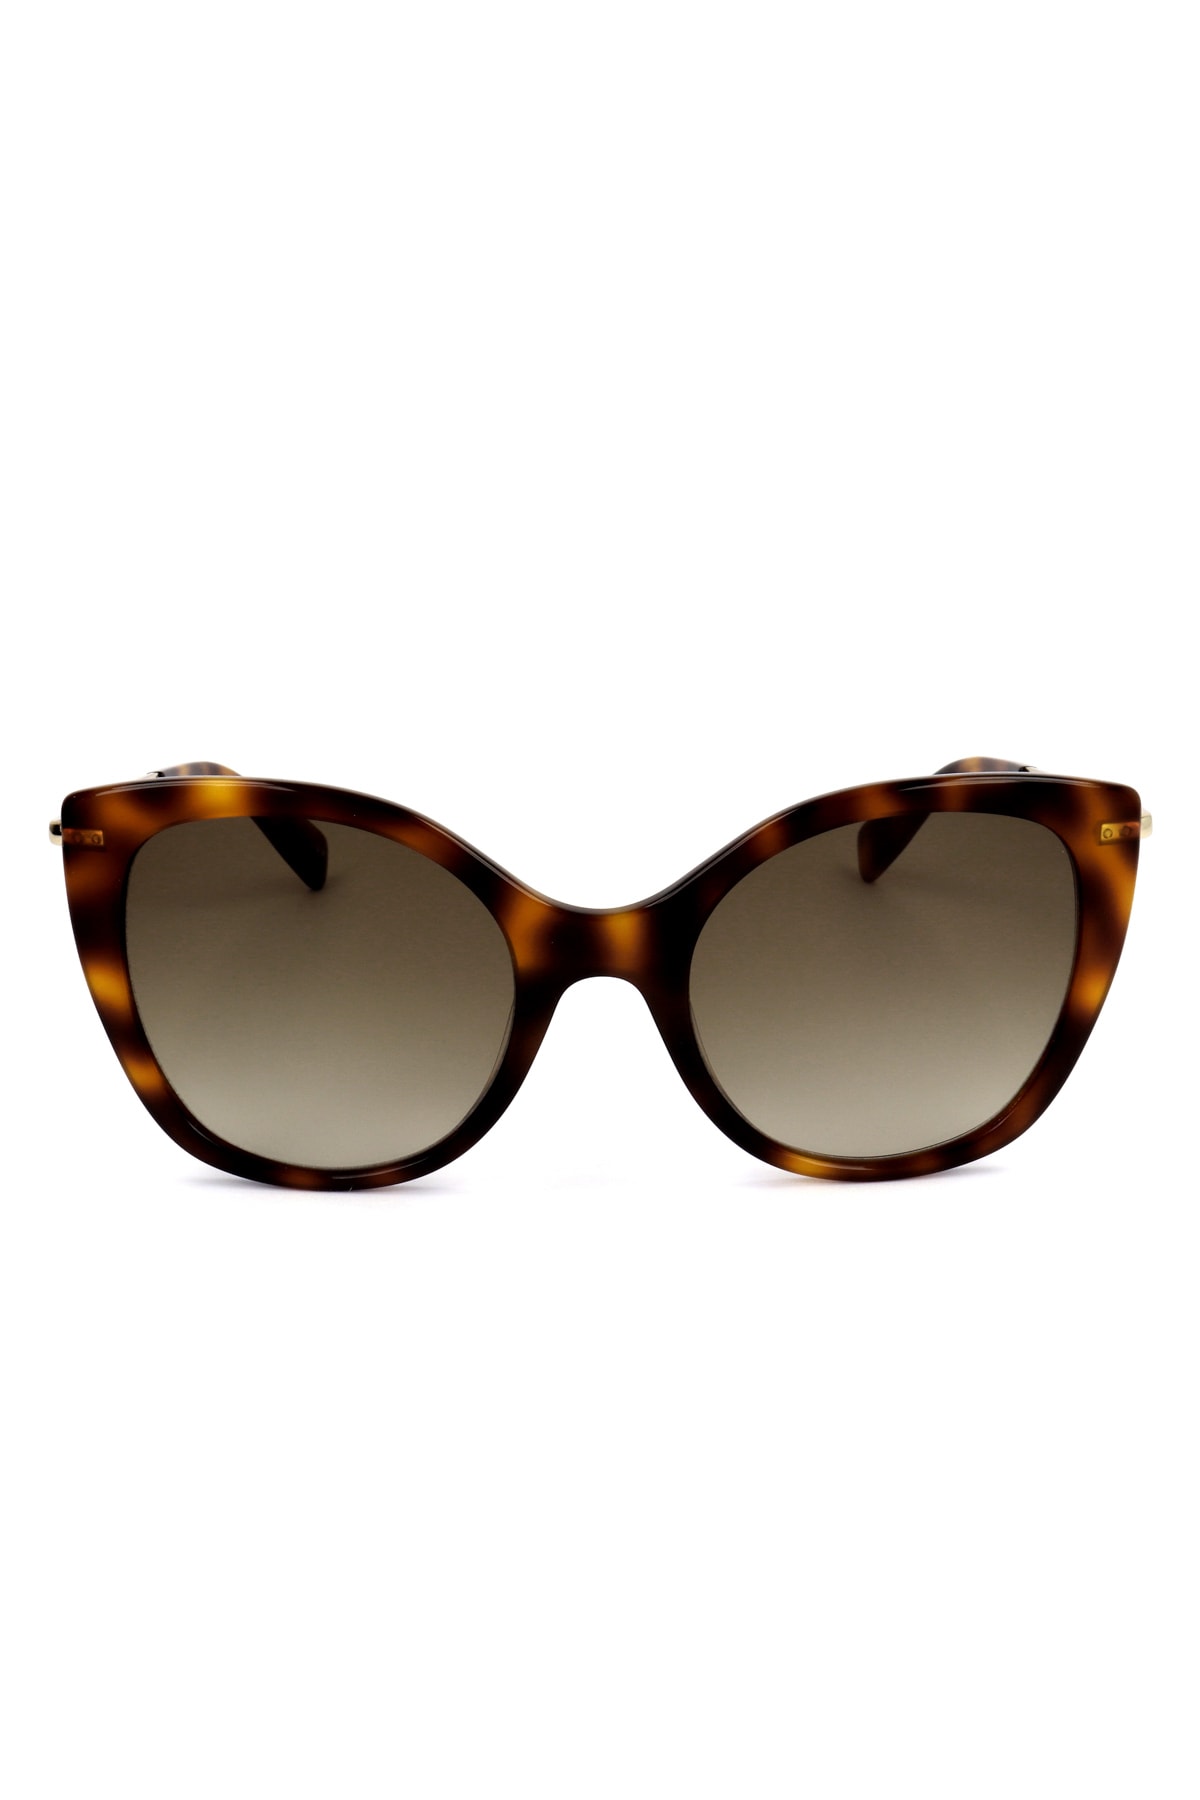 Longchamp Sonnenbrille Mehrfarbig Schmetterling/Cat Eye